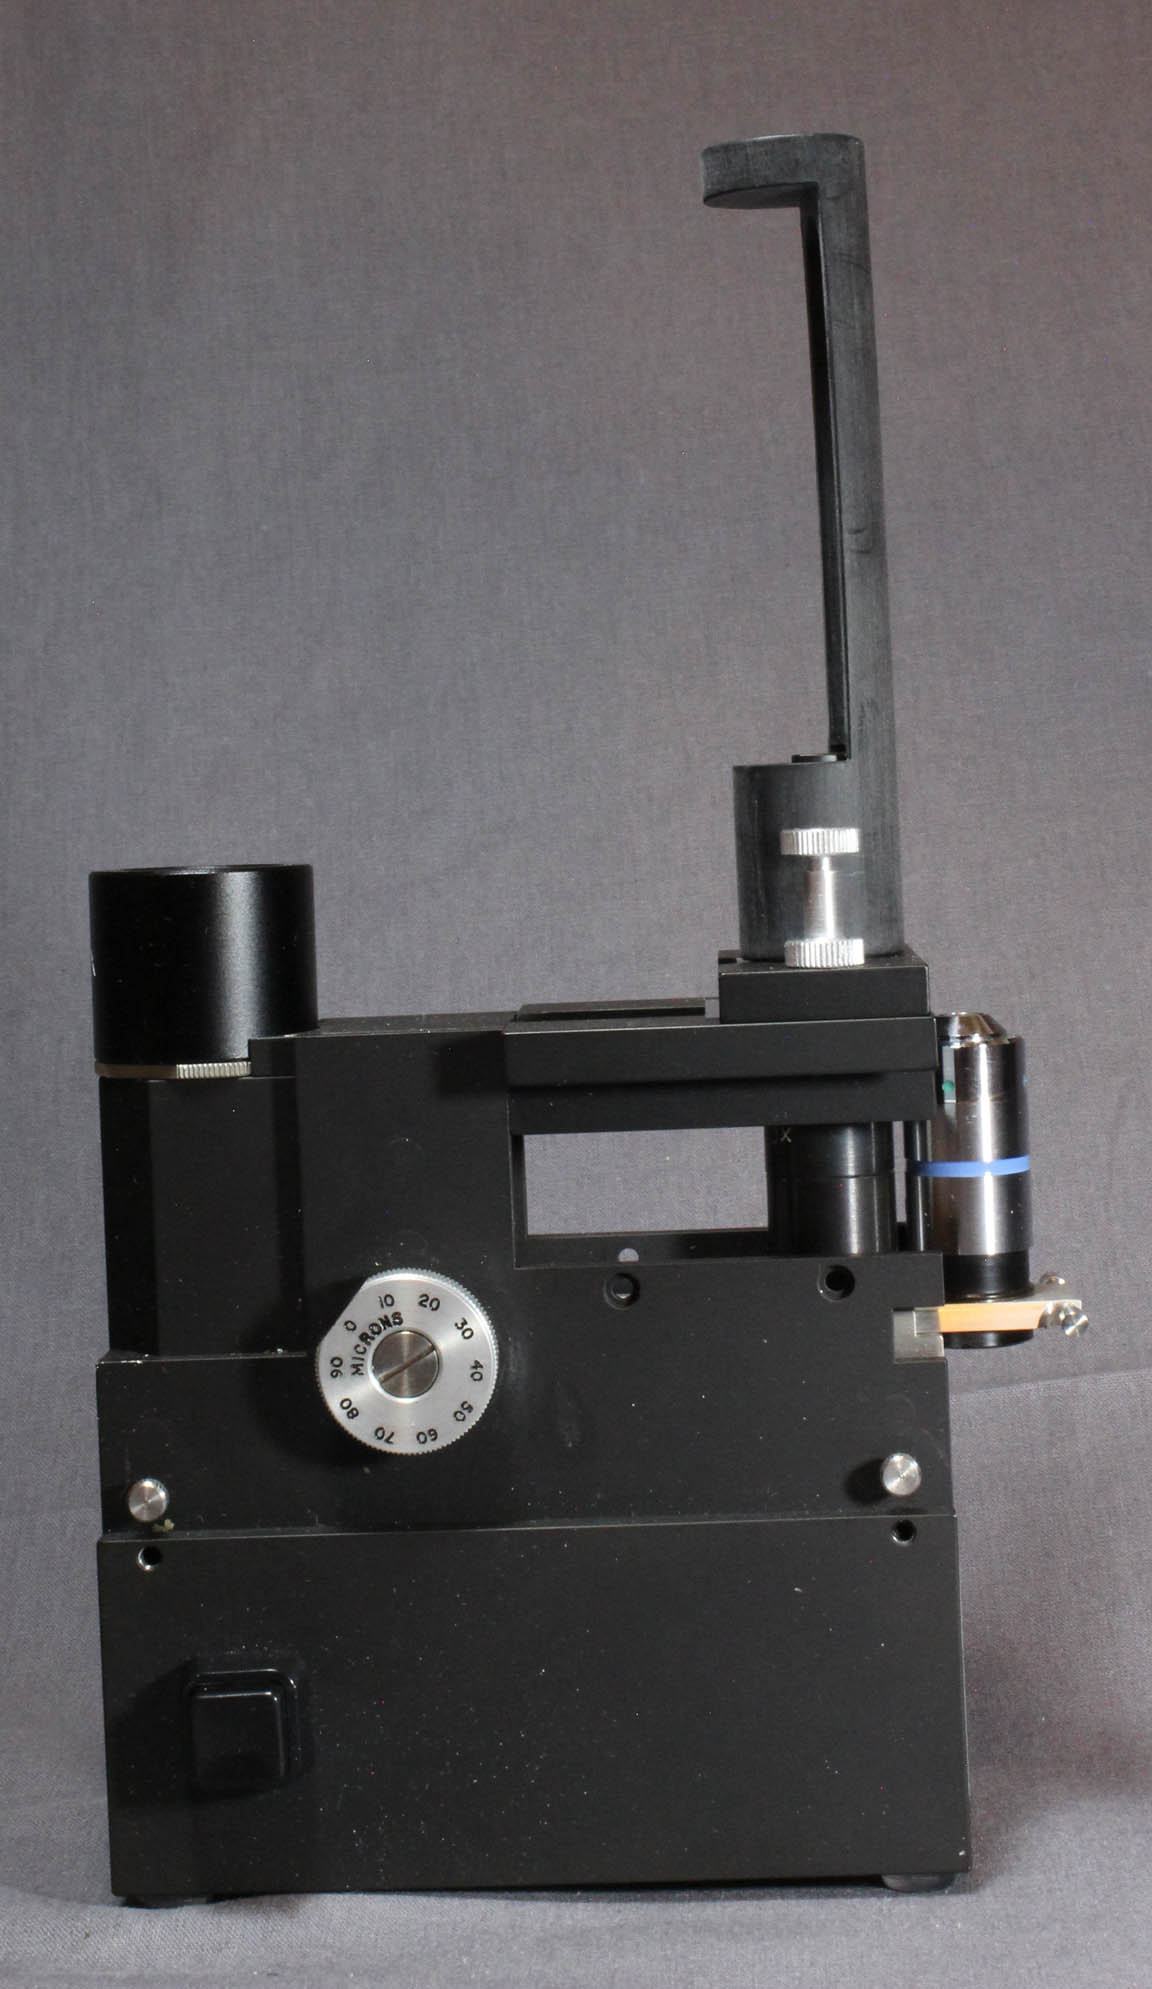 Interferometer microscope